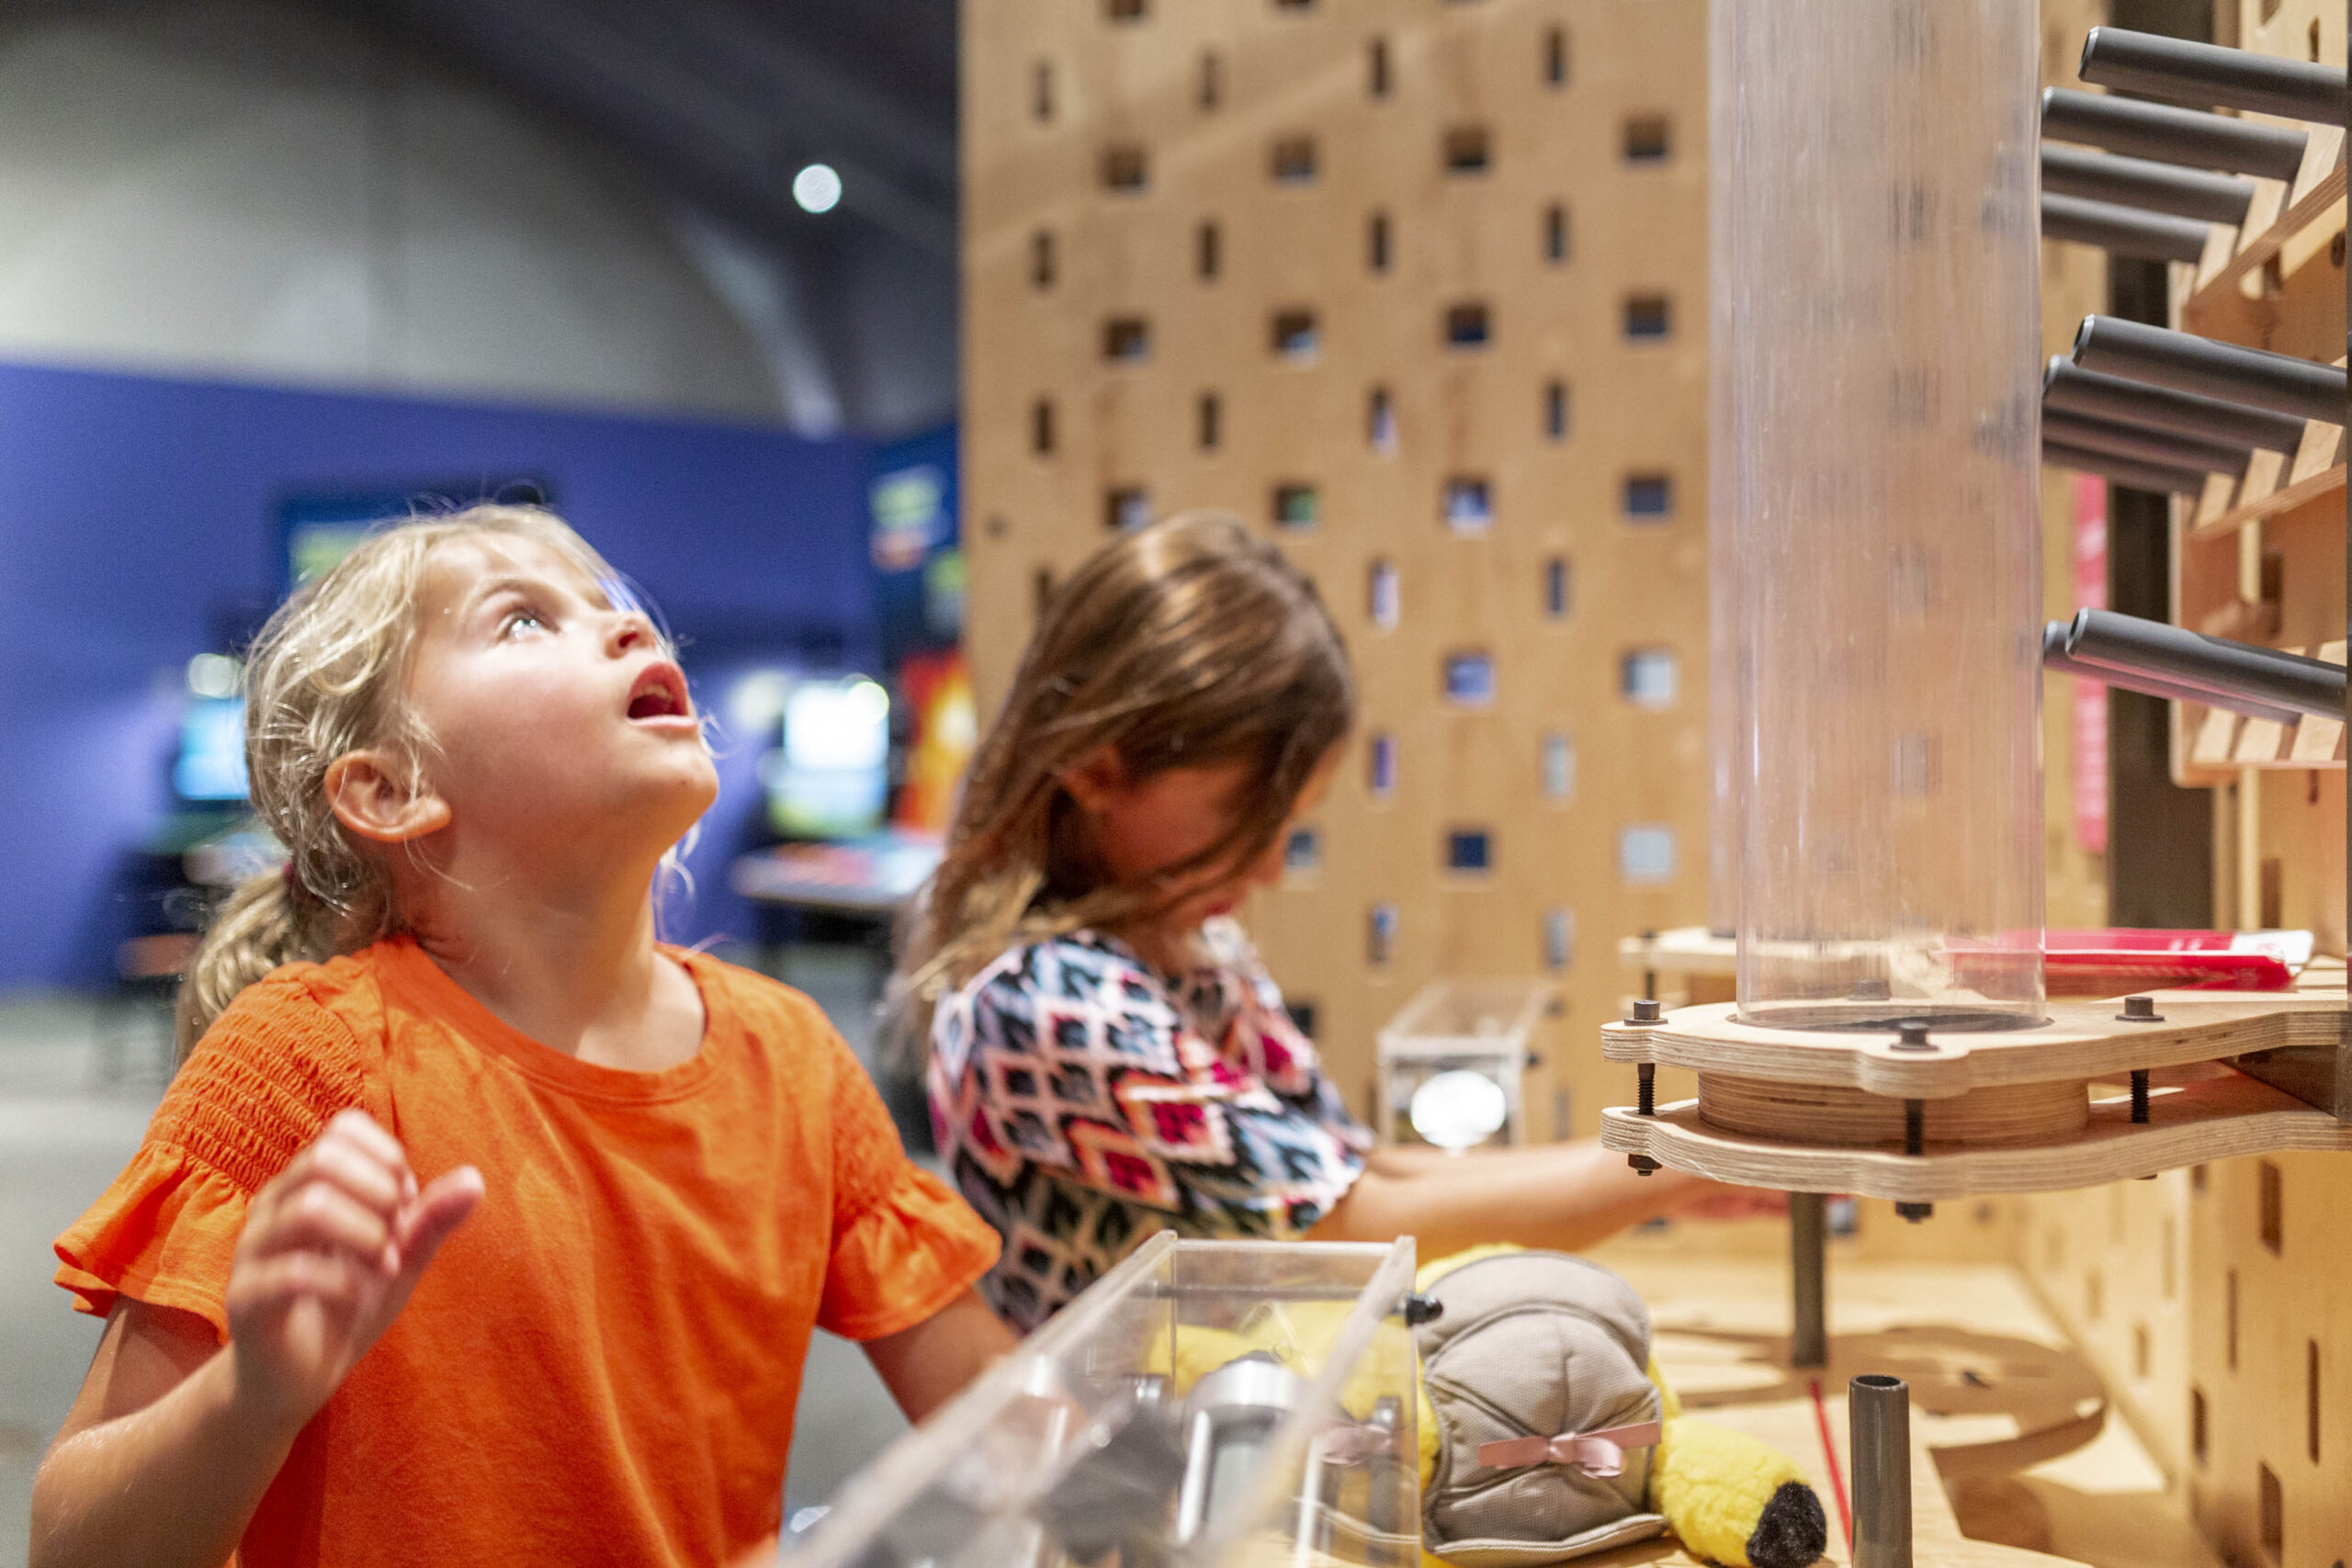 Two children exploring a science exhibit